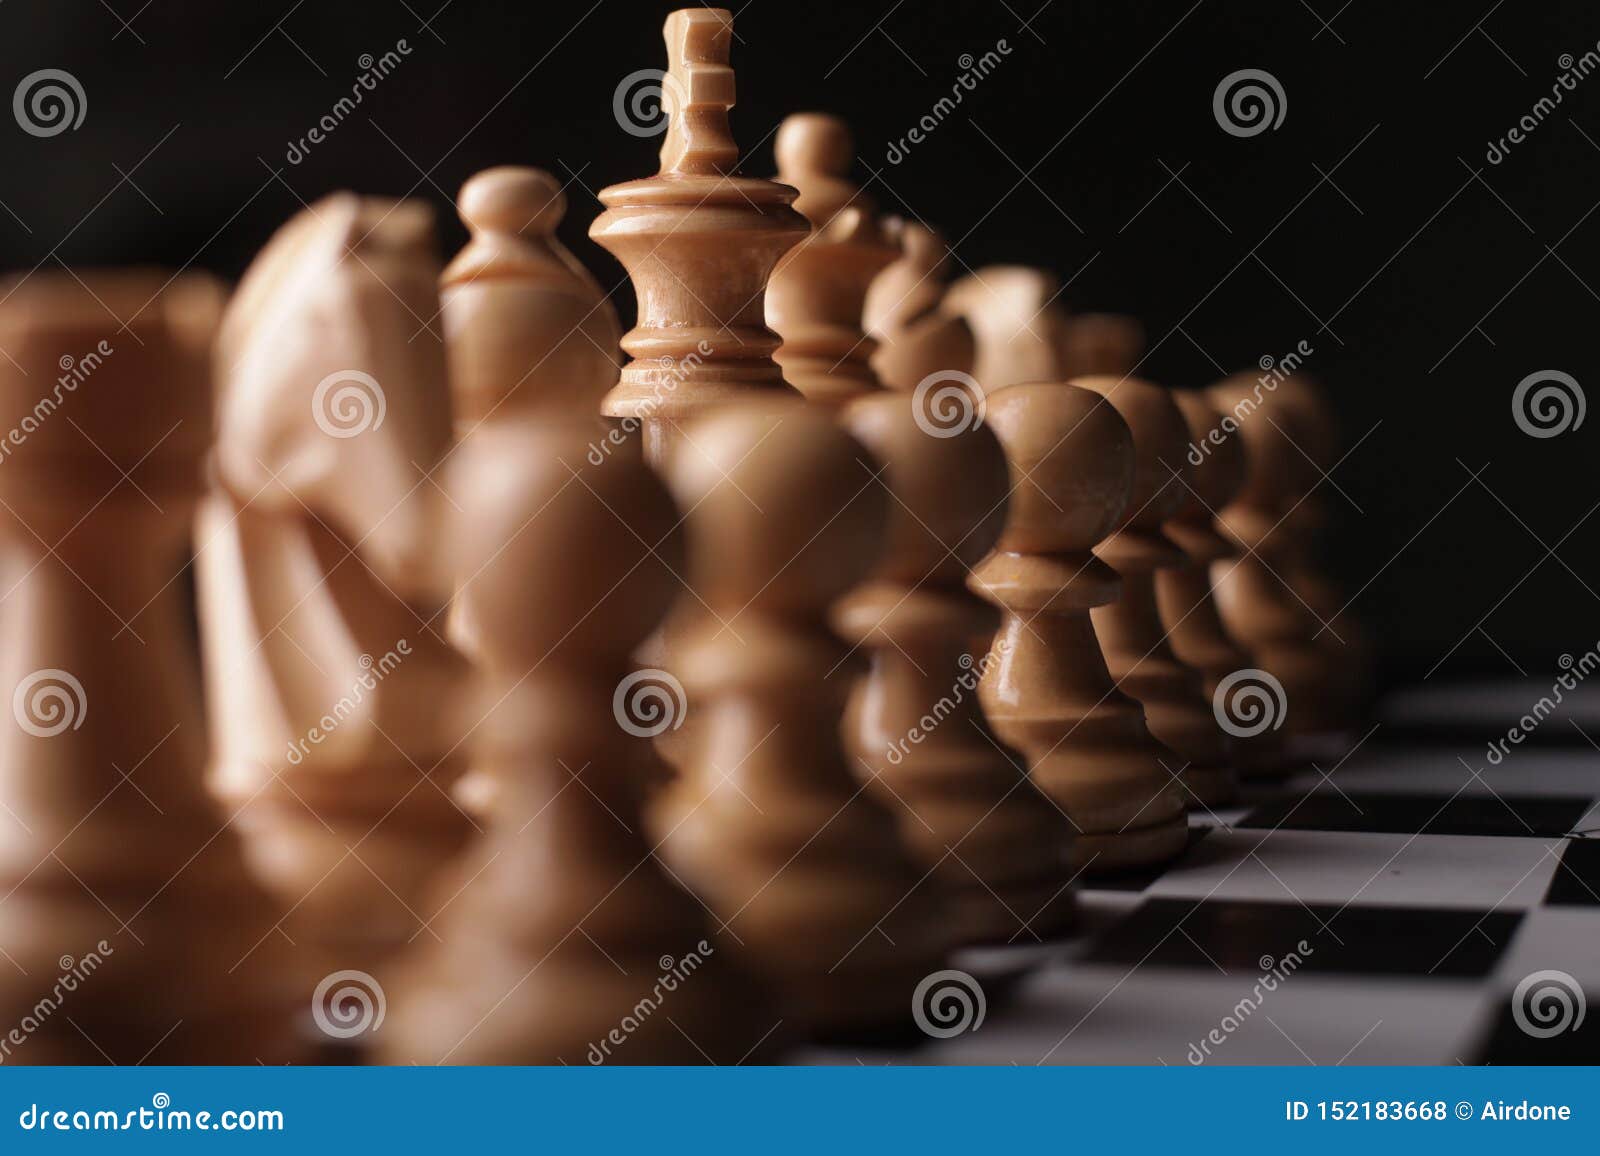 chess, close up image